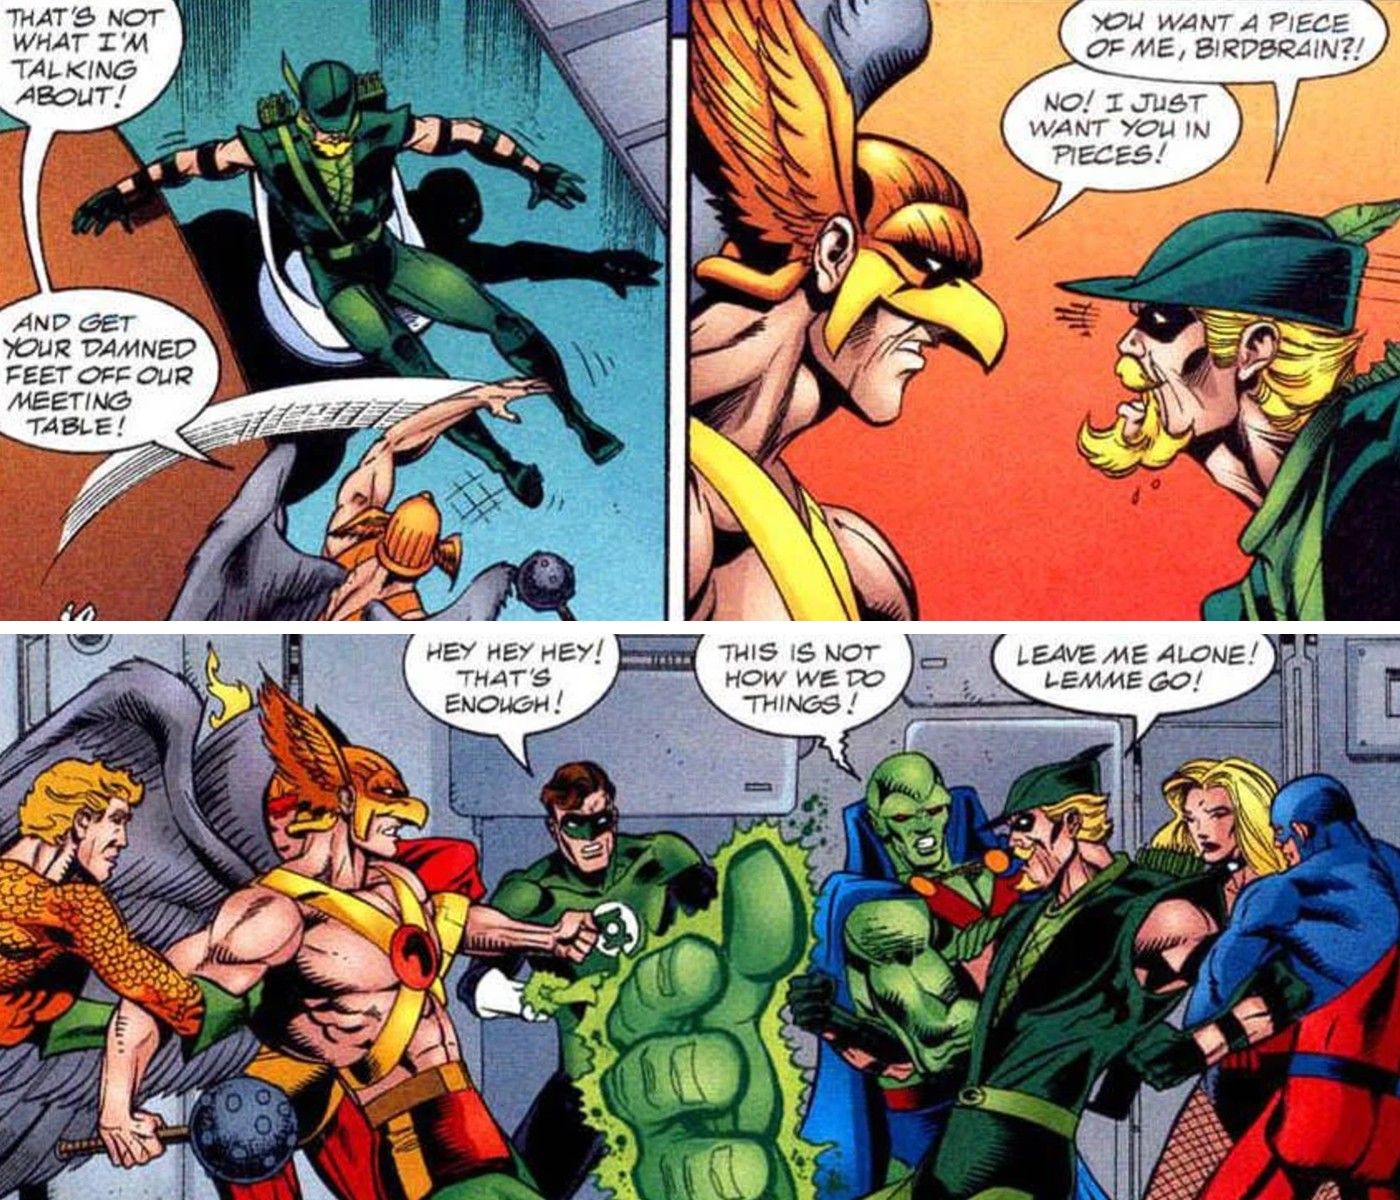 Green Arrow Hawkman argument